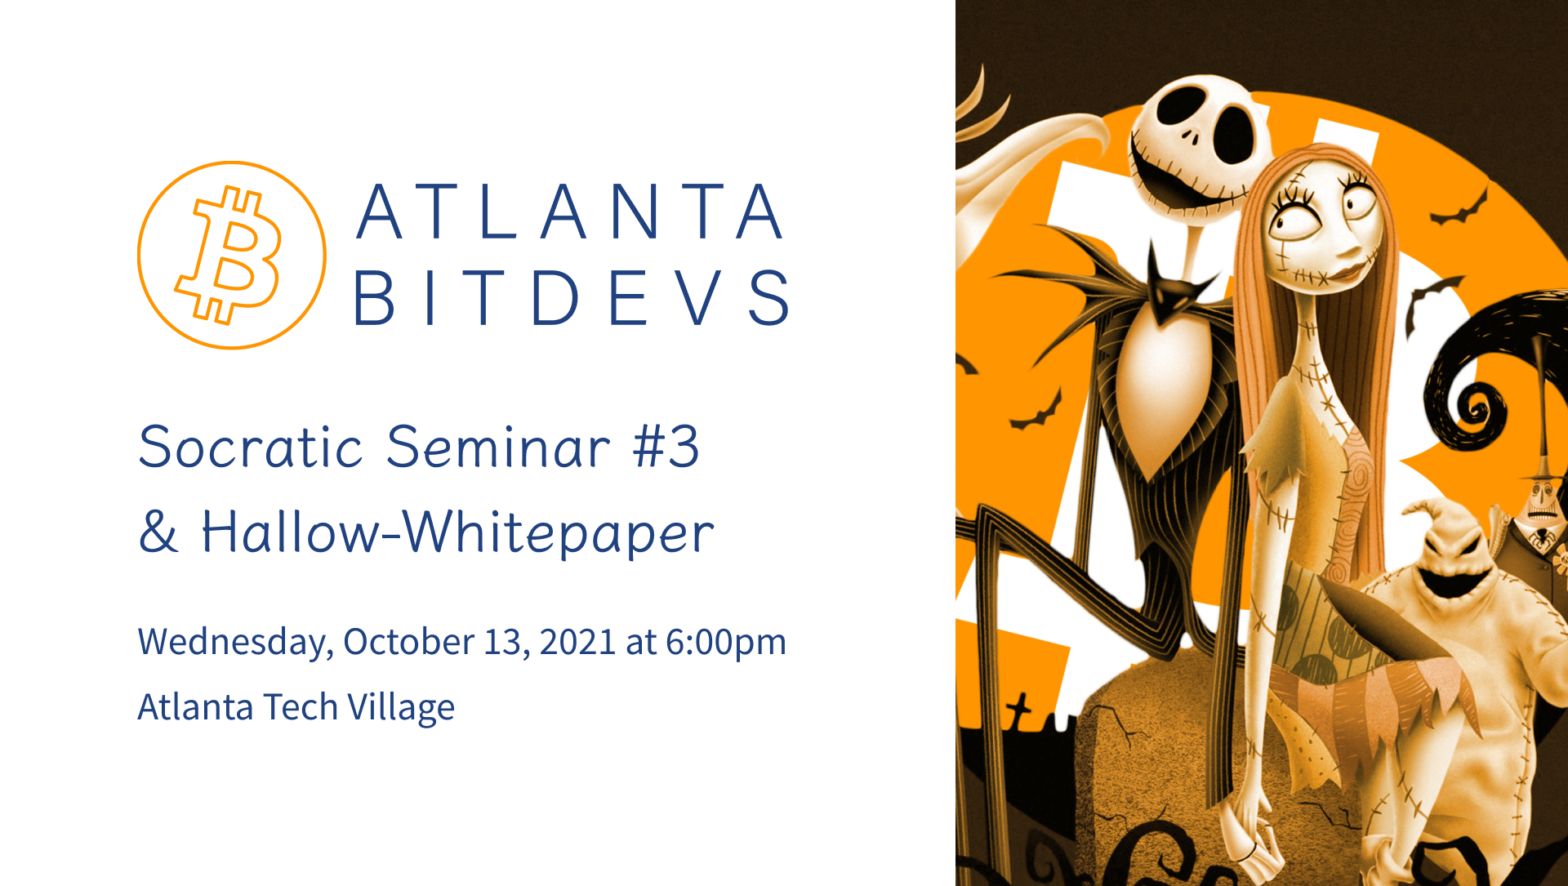 Atlanta BitDevs Socratic Seminar #3 poster